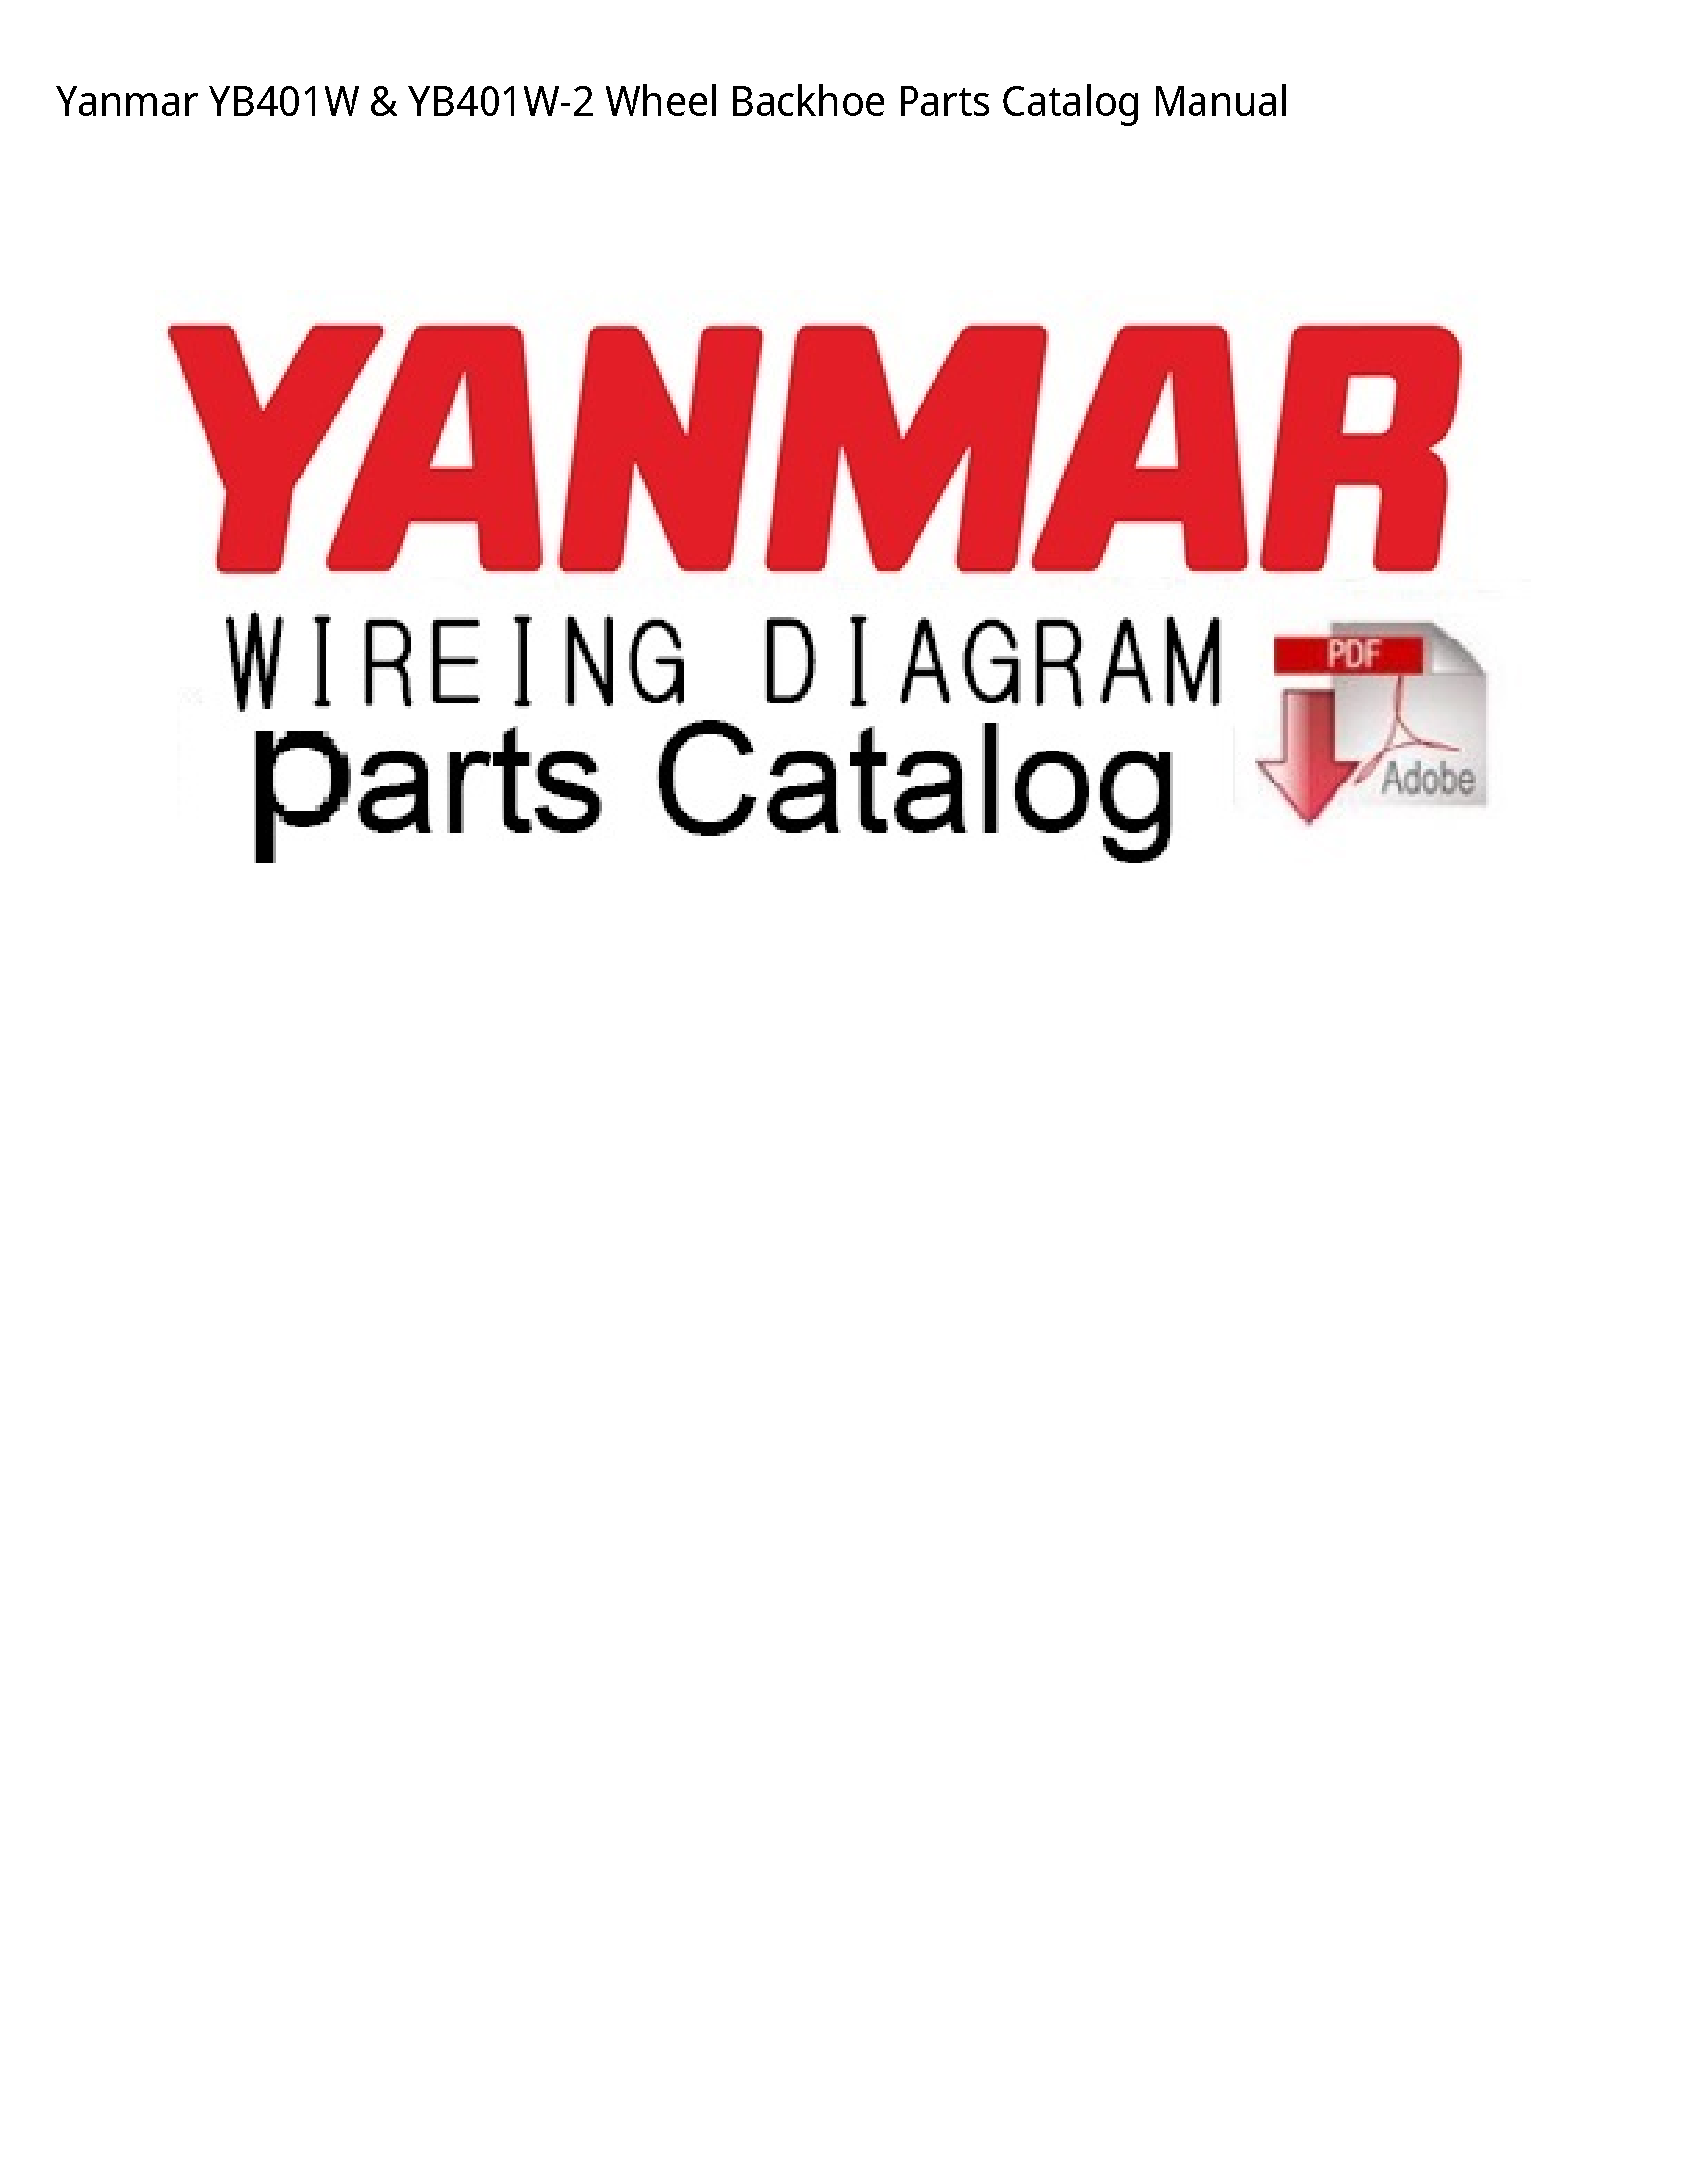 Yanmar YB401W Wheel Backhoe Parts Catalog manual